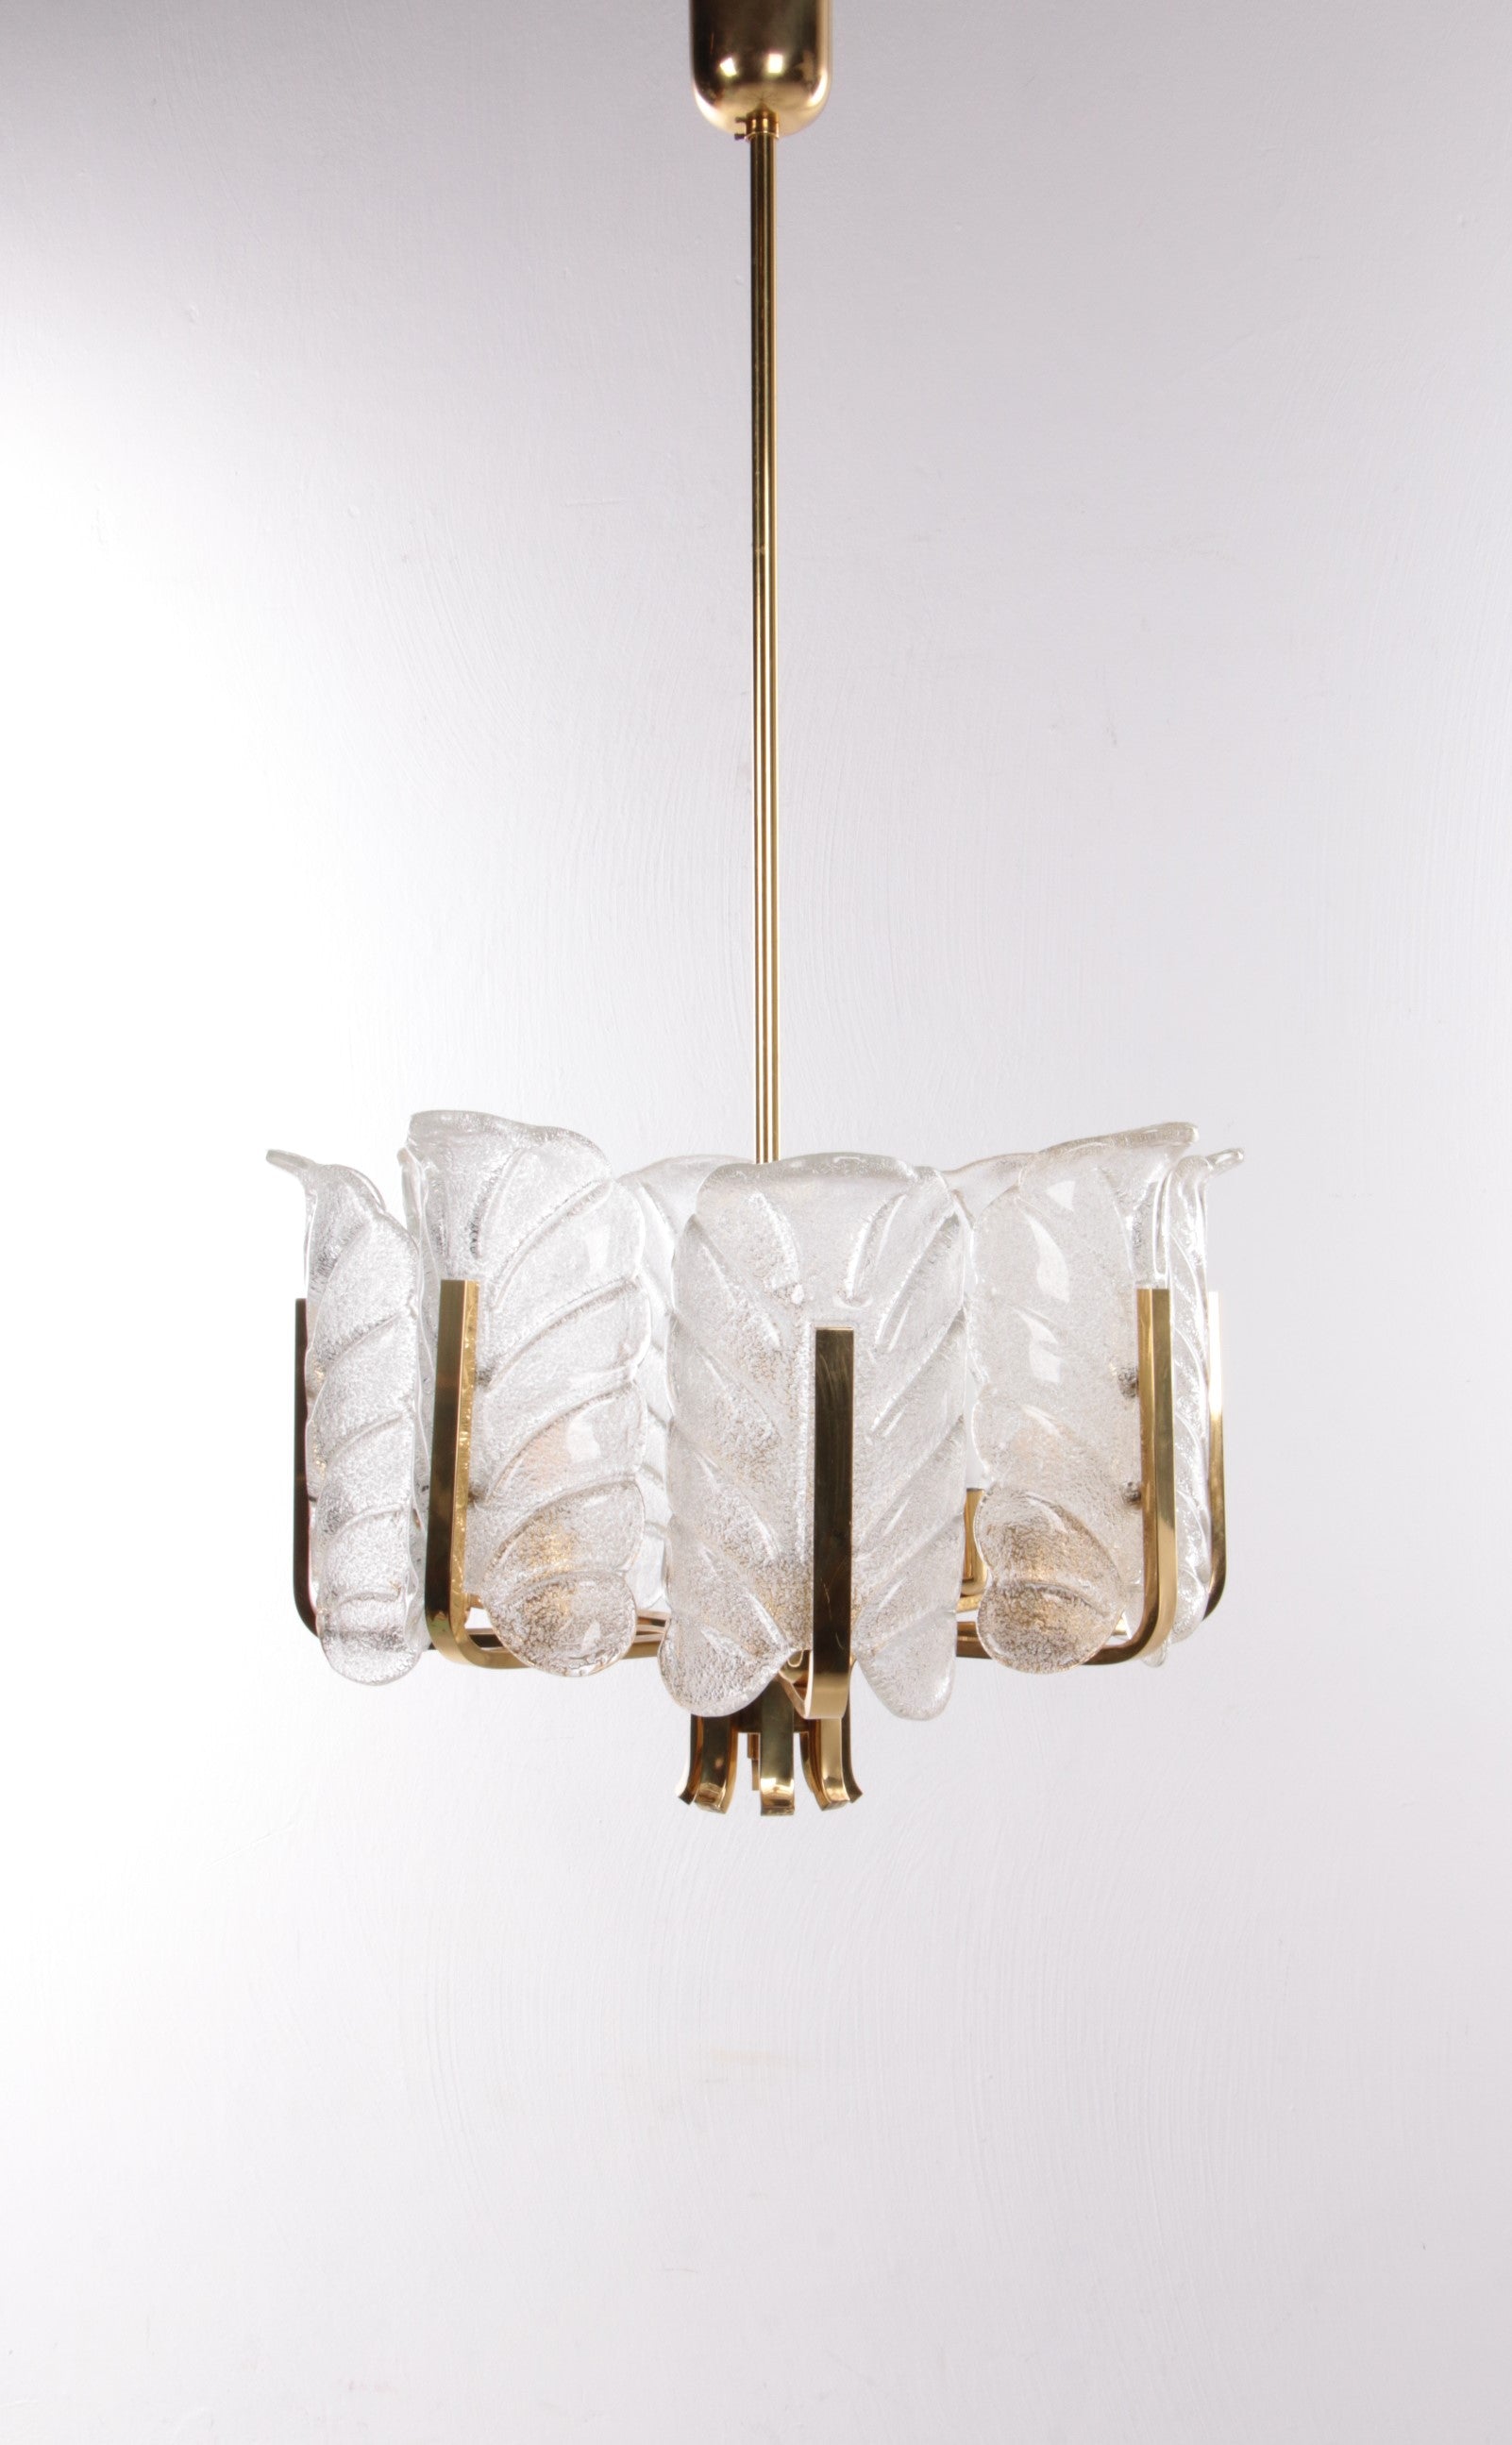 Vintage Hanglamp ontwerp van Carl Fagerlund 1960,zweden